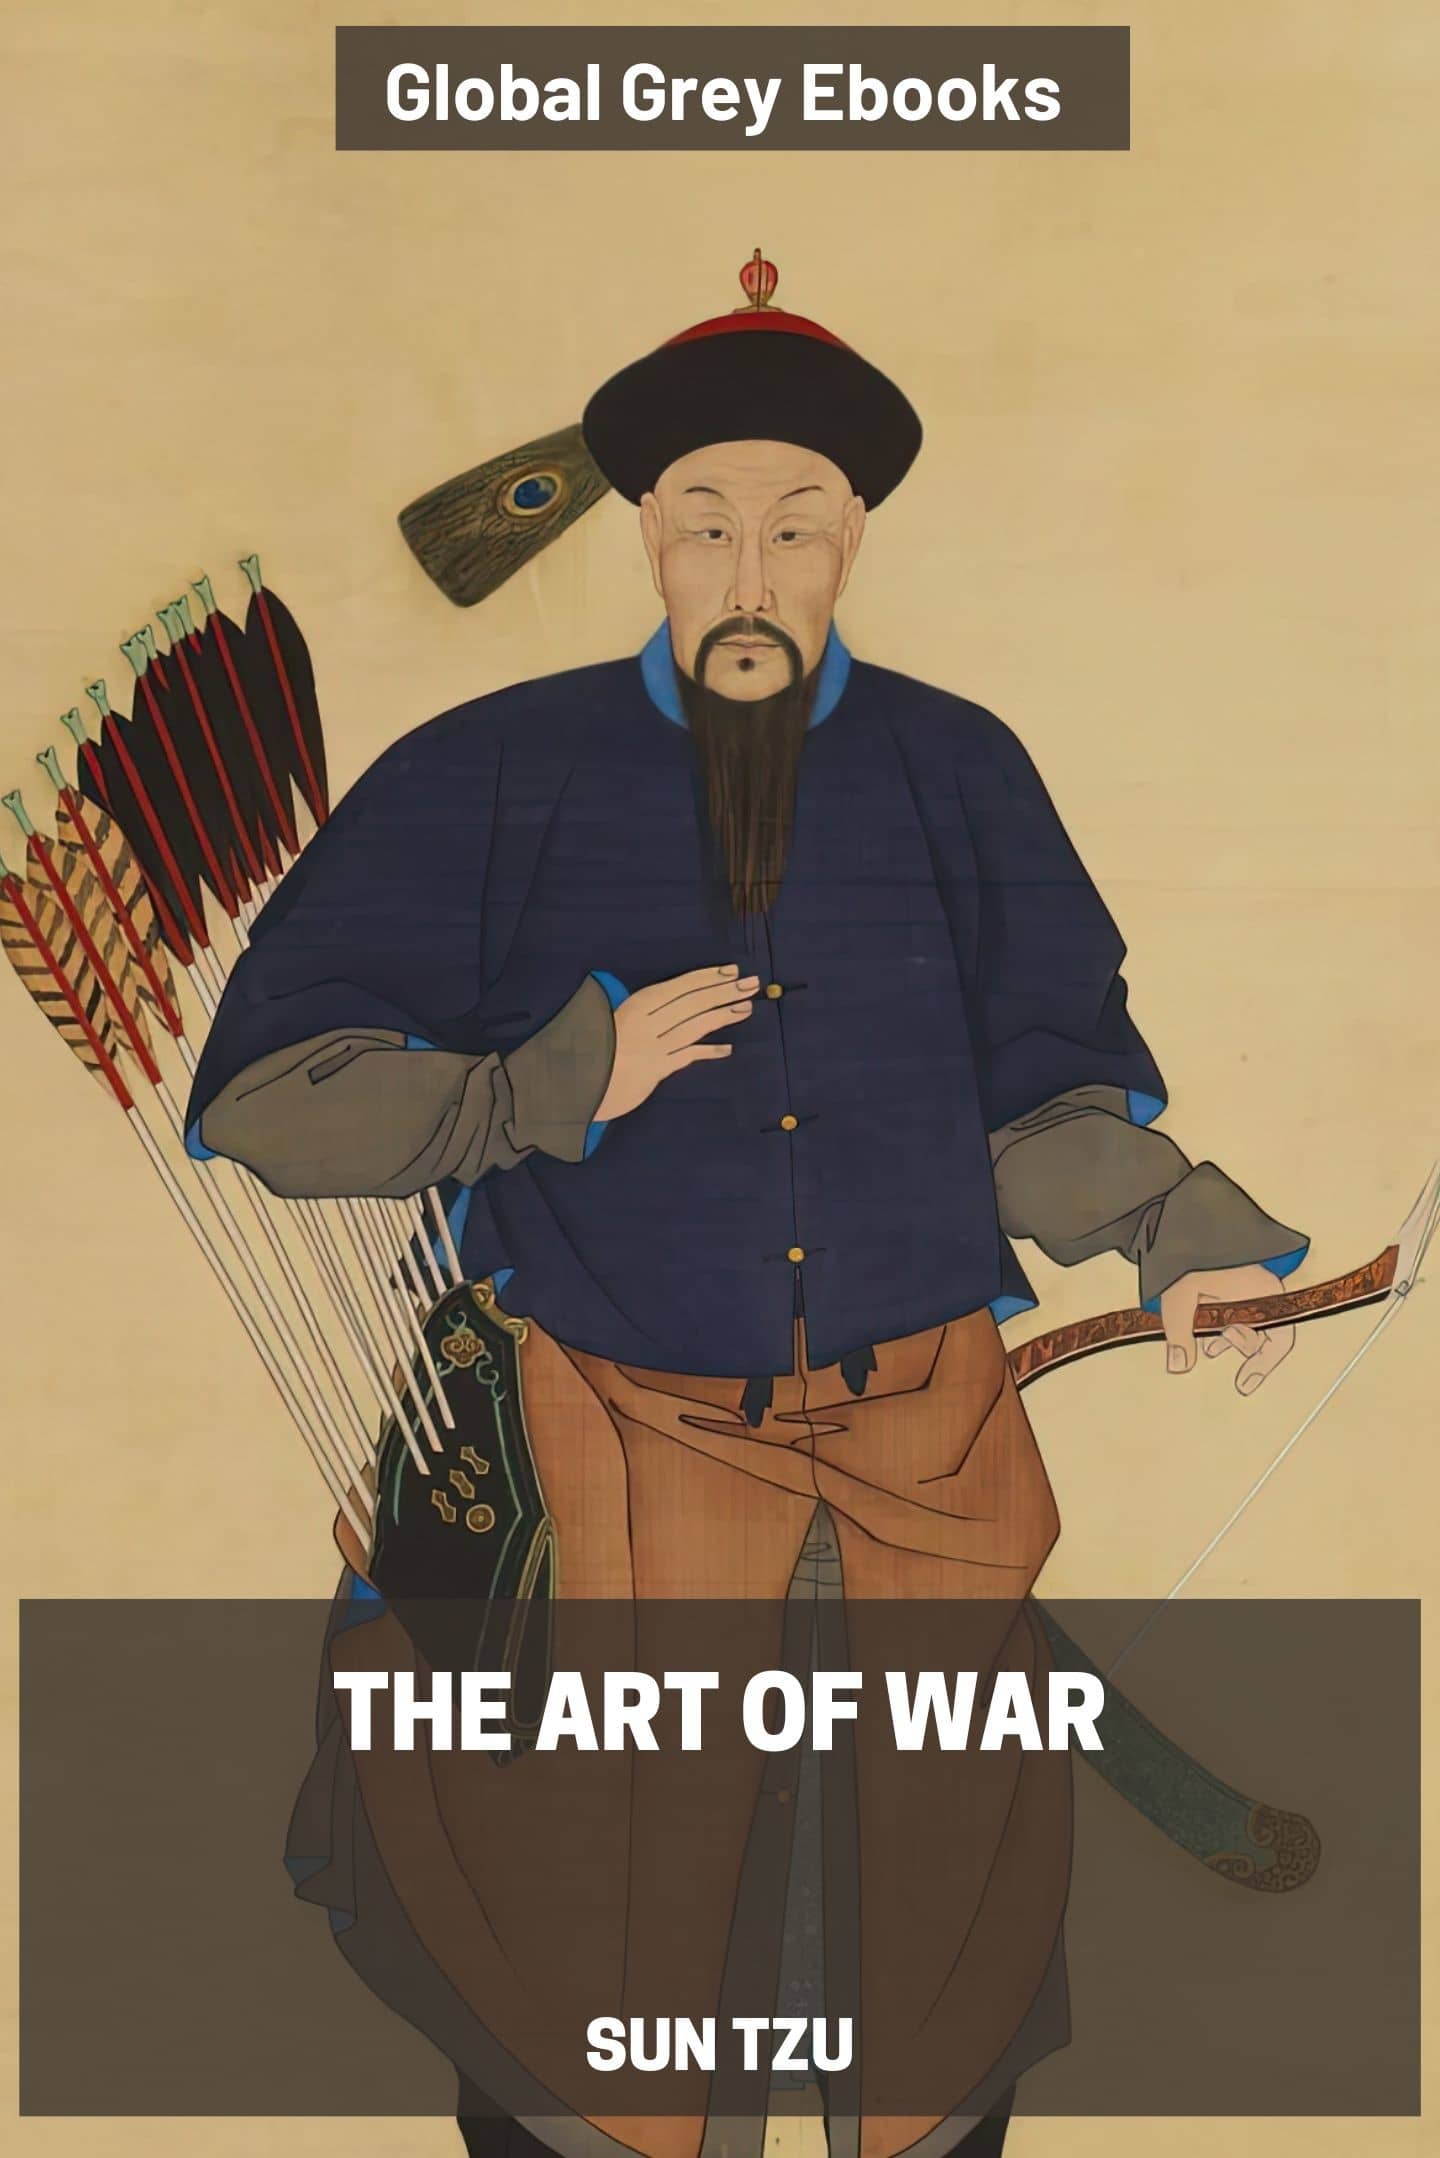 The Art of War download free in PDF or ePUB - AliceAndBooks